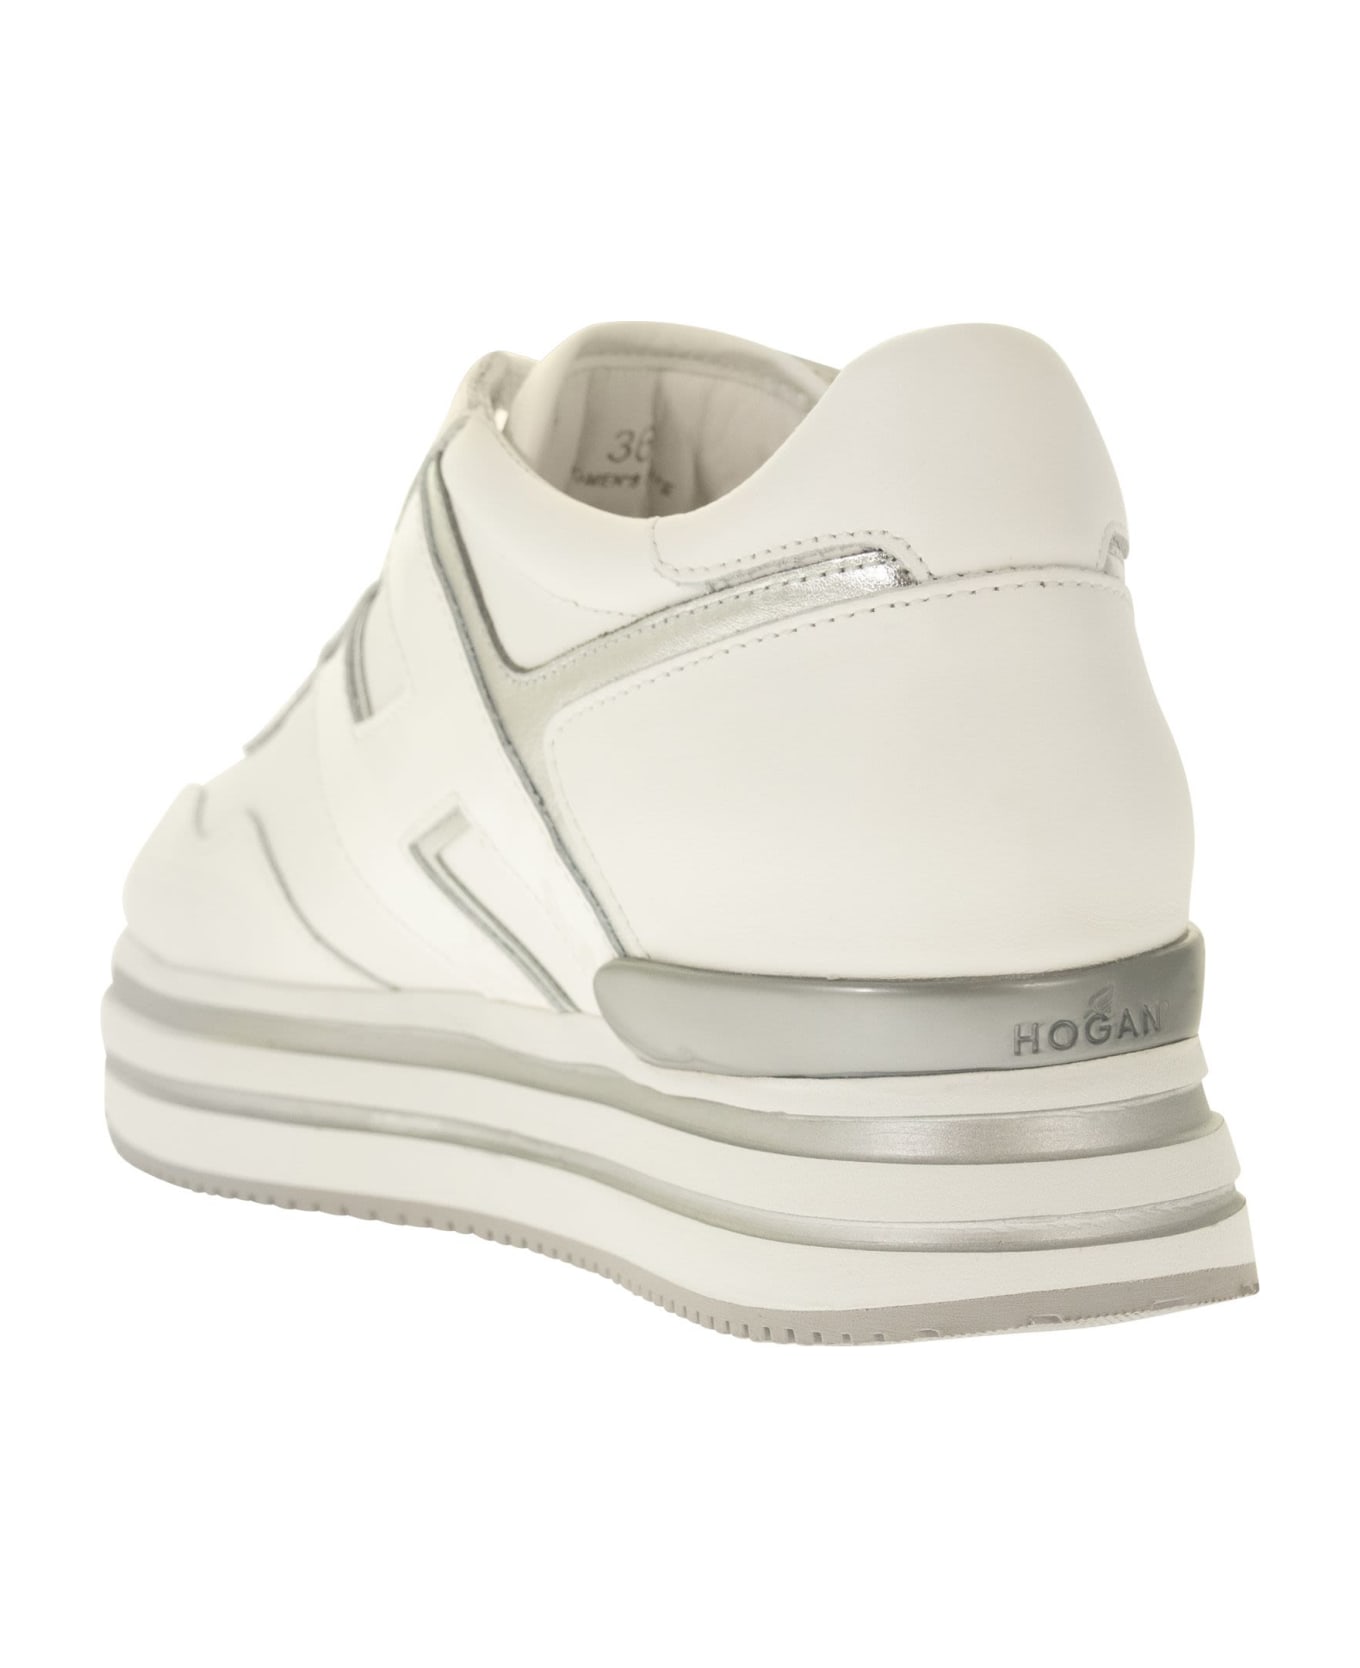 Hogan Midi H483 - Leather Sneakers